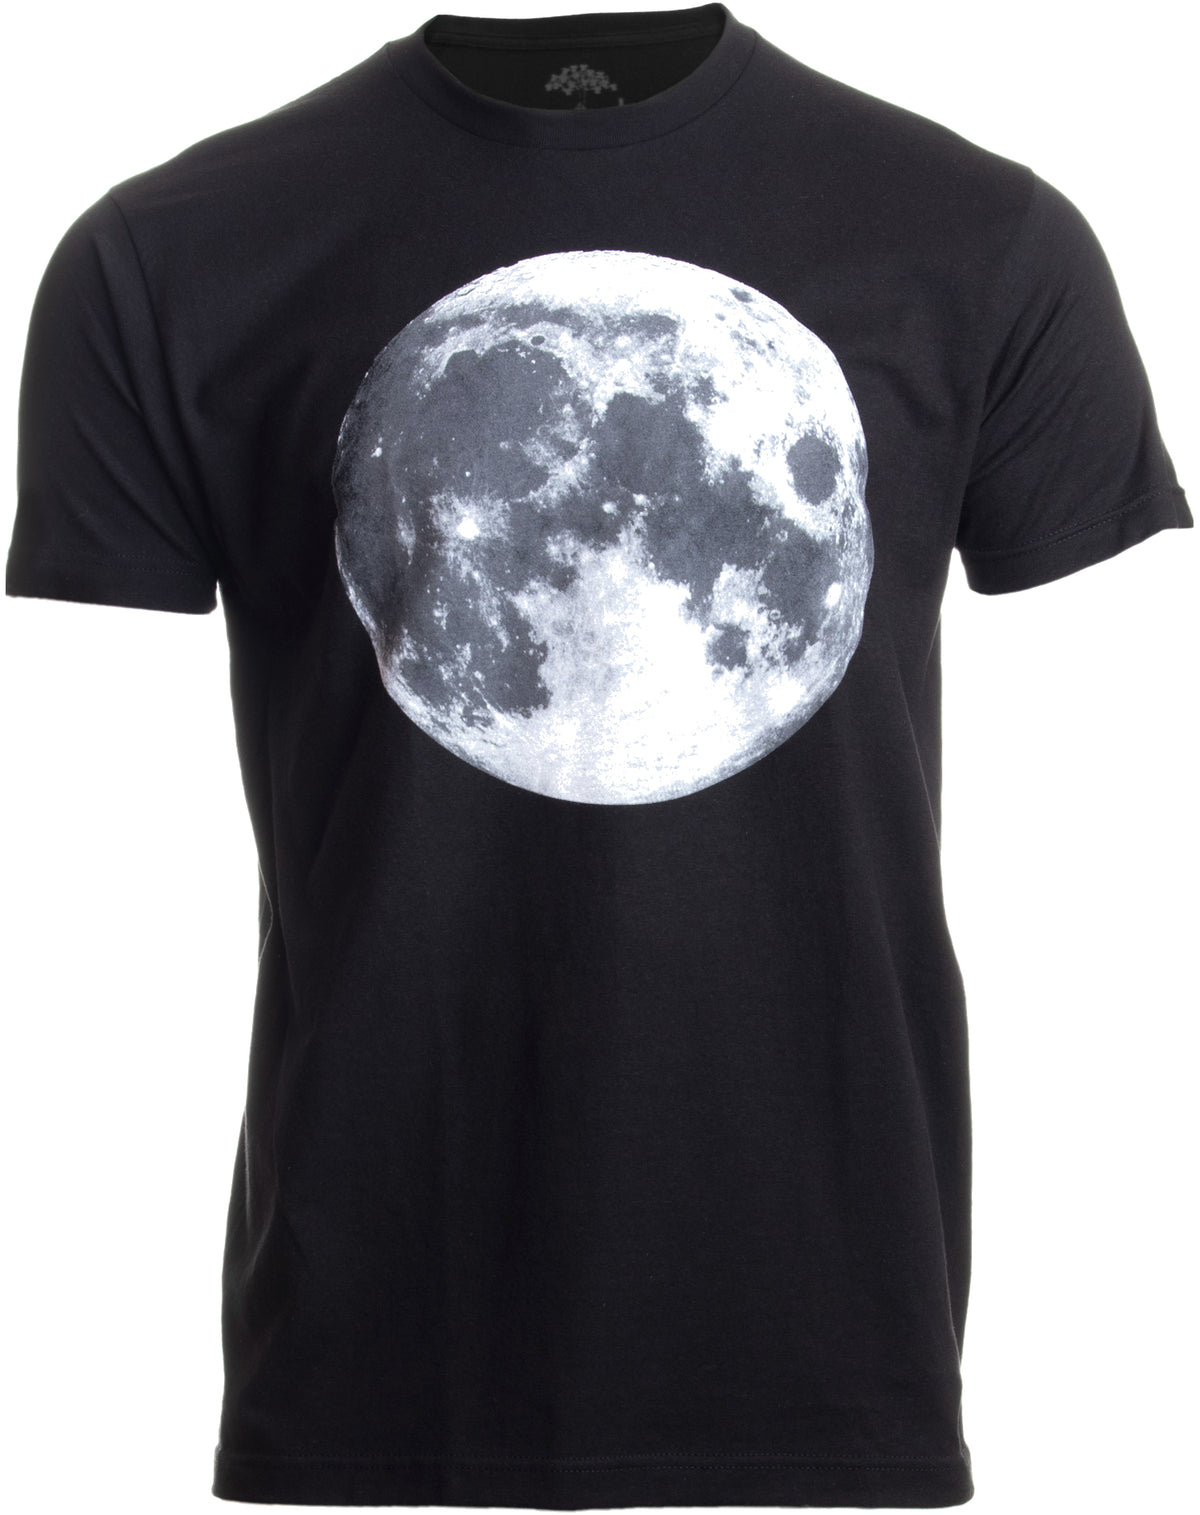 The Moon | NASA Photography Astronomy Space Nerd Full Luna for Men Women T-shirt